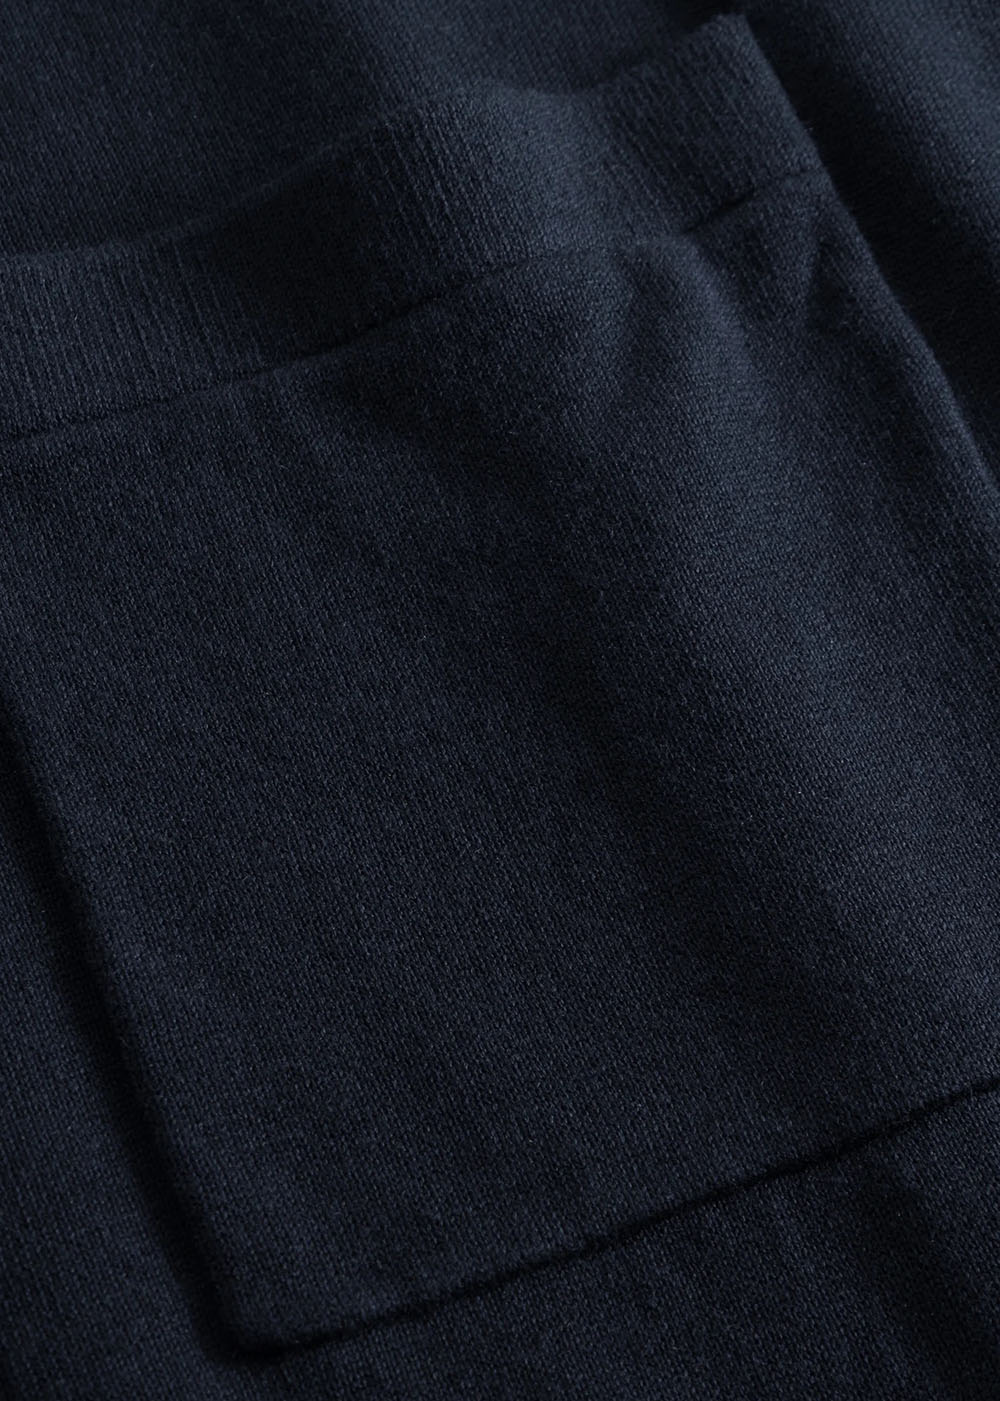 Rollo Cotton Linen SS Shirt - Dark Navy - Norse Projects Canada - Danali - N45-0572